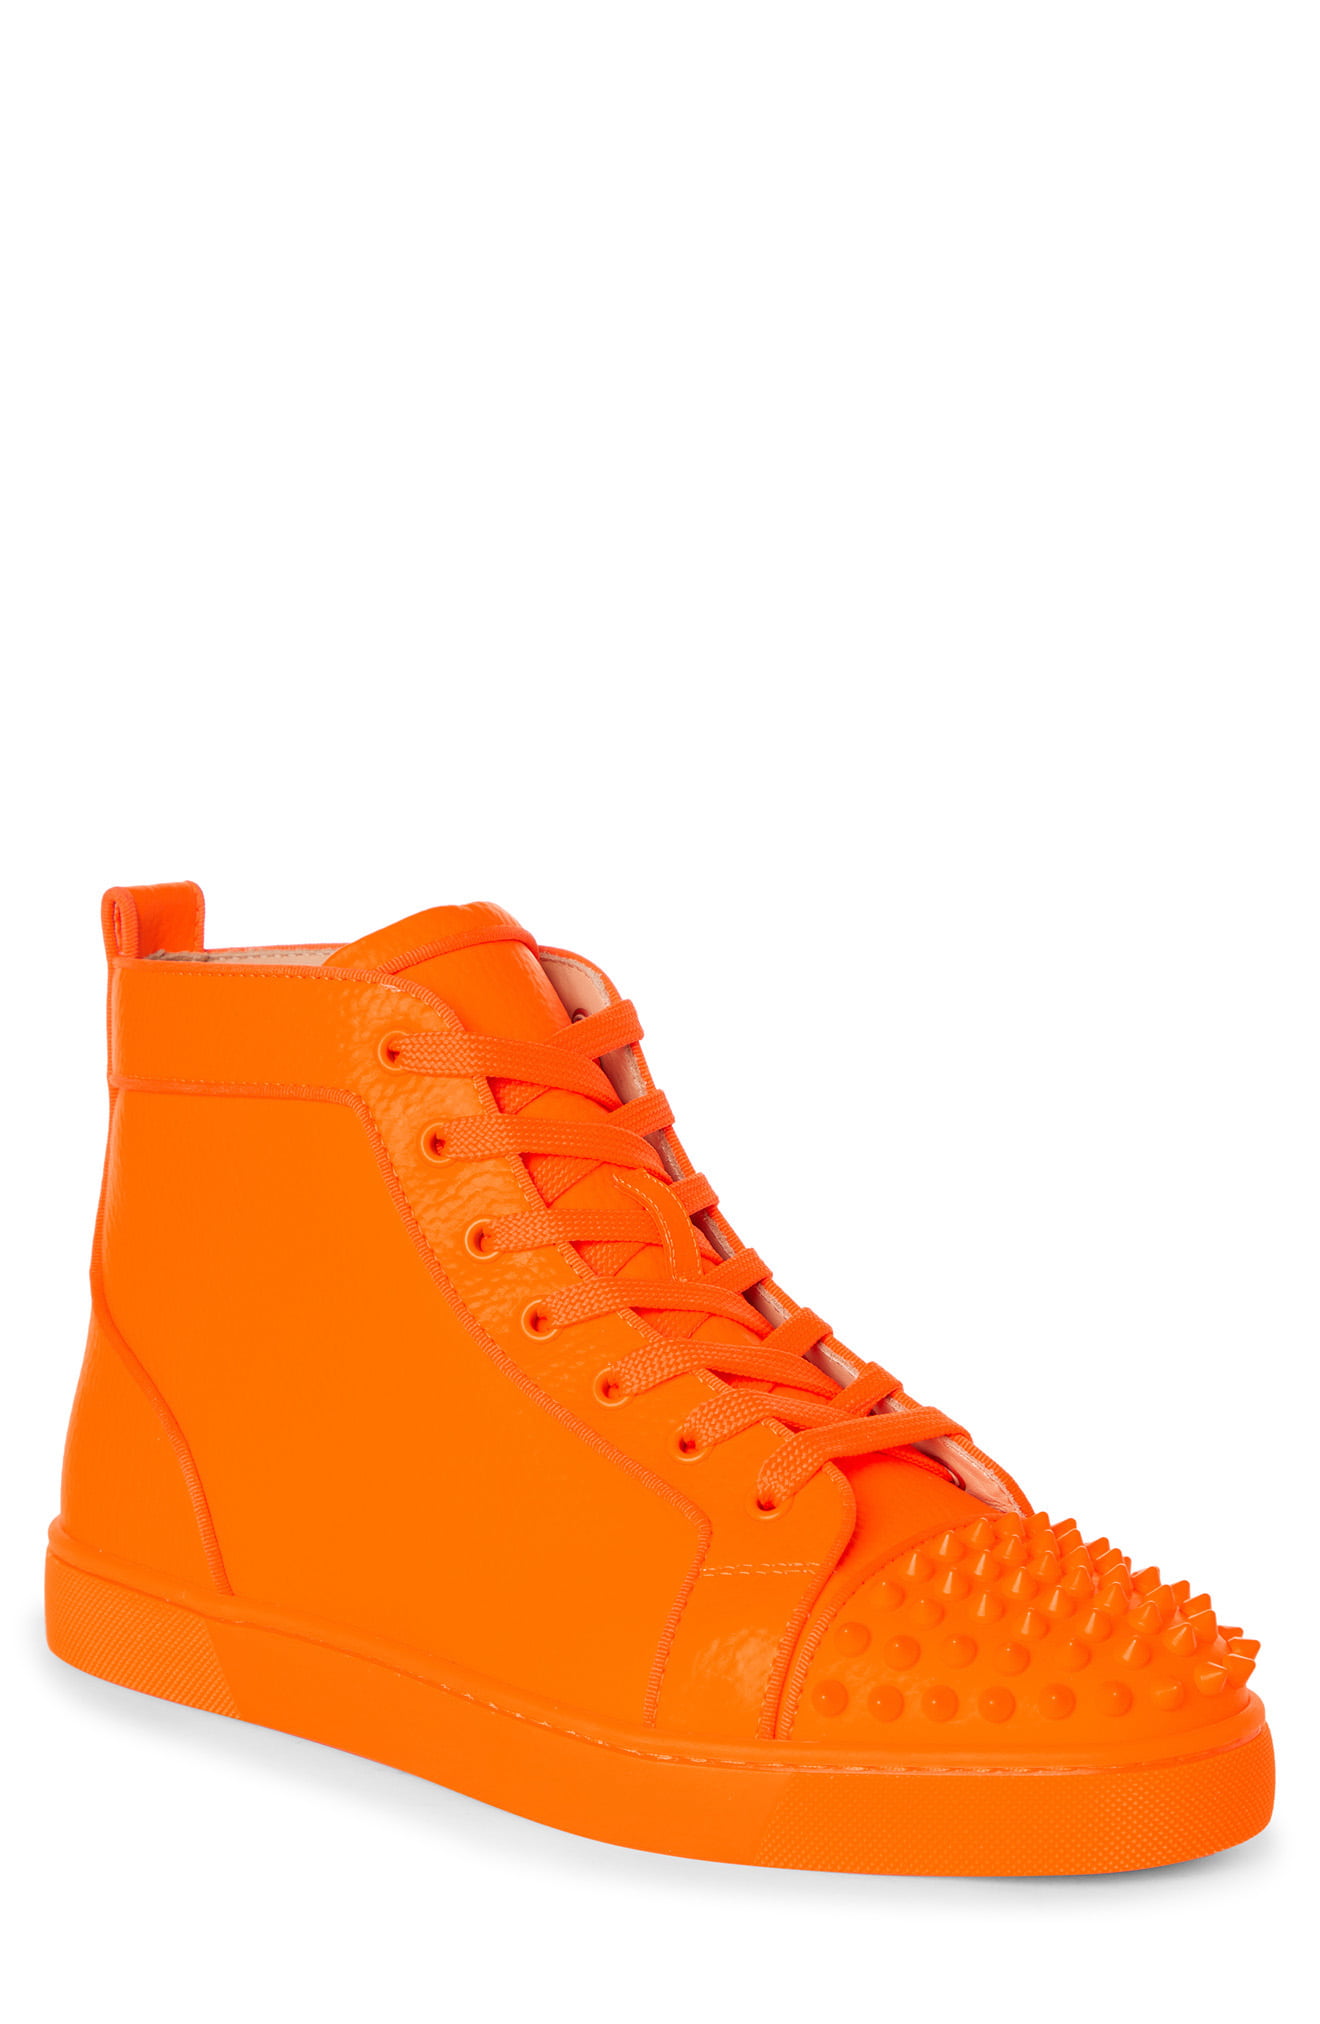 Men's Louboutin Lou Spikes High Top Sneaker, Size 7US - Orange | Fashion Gone